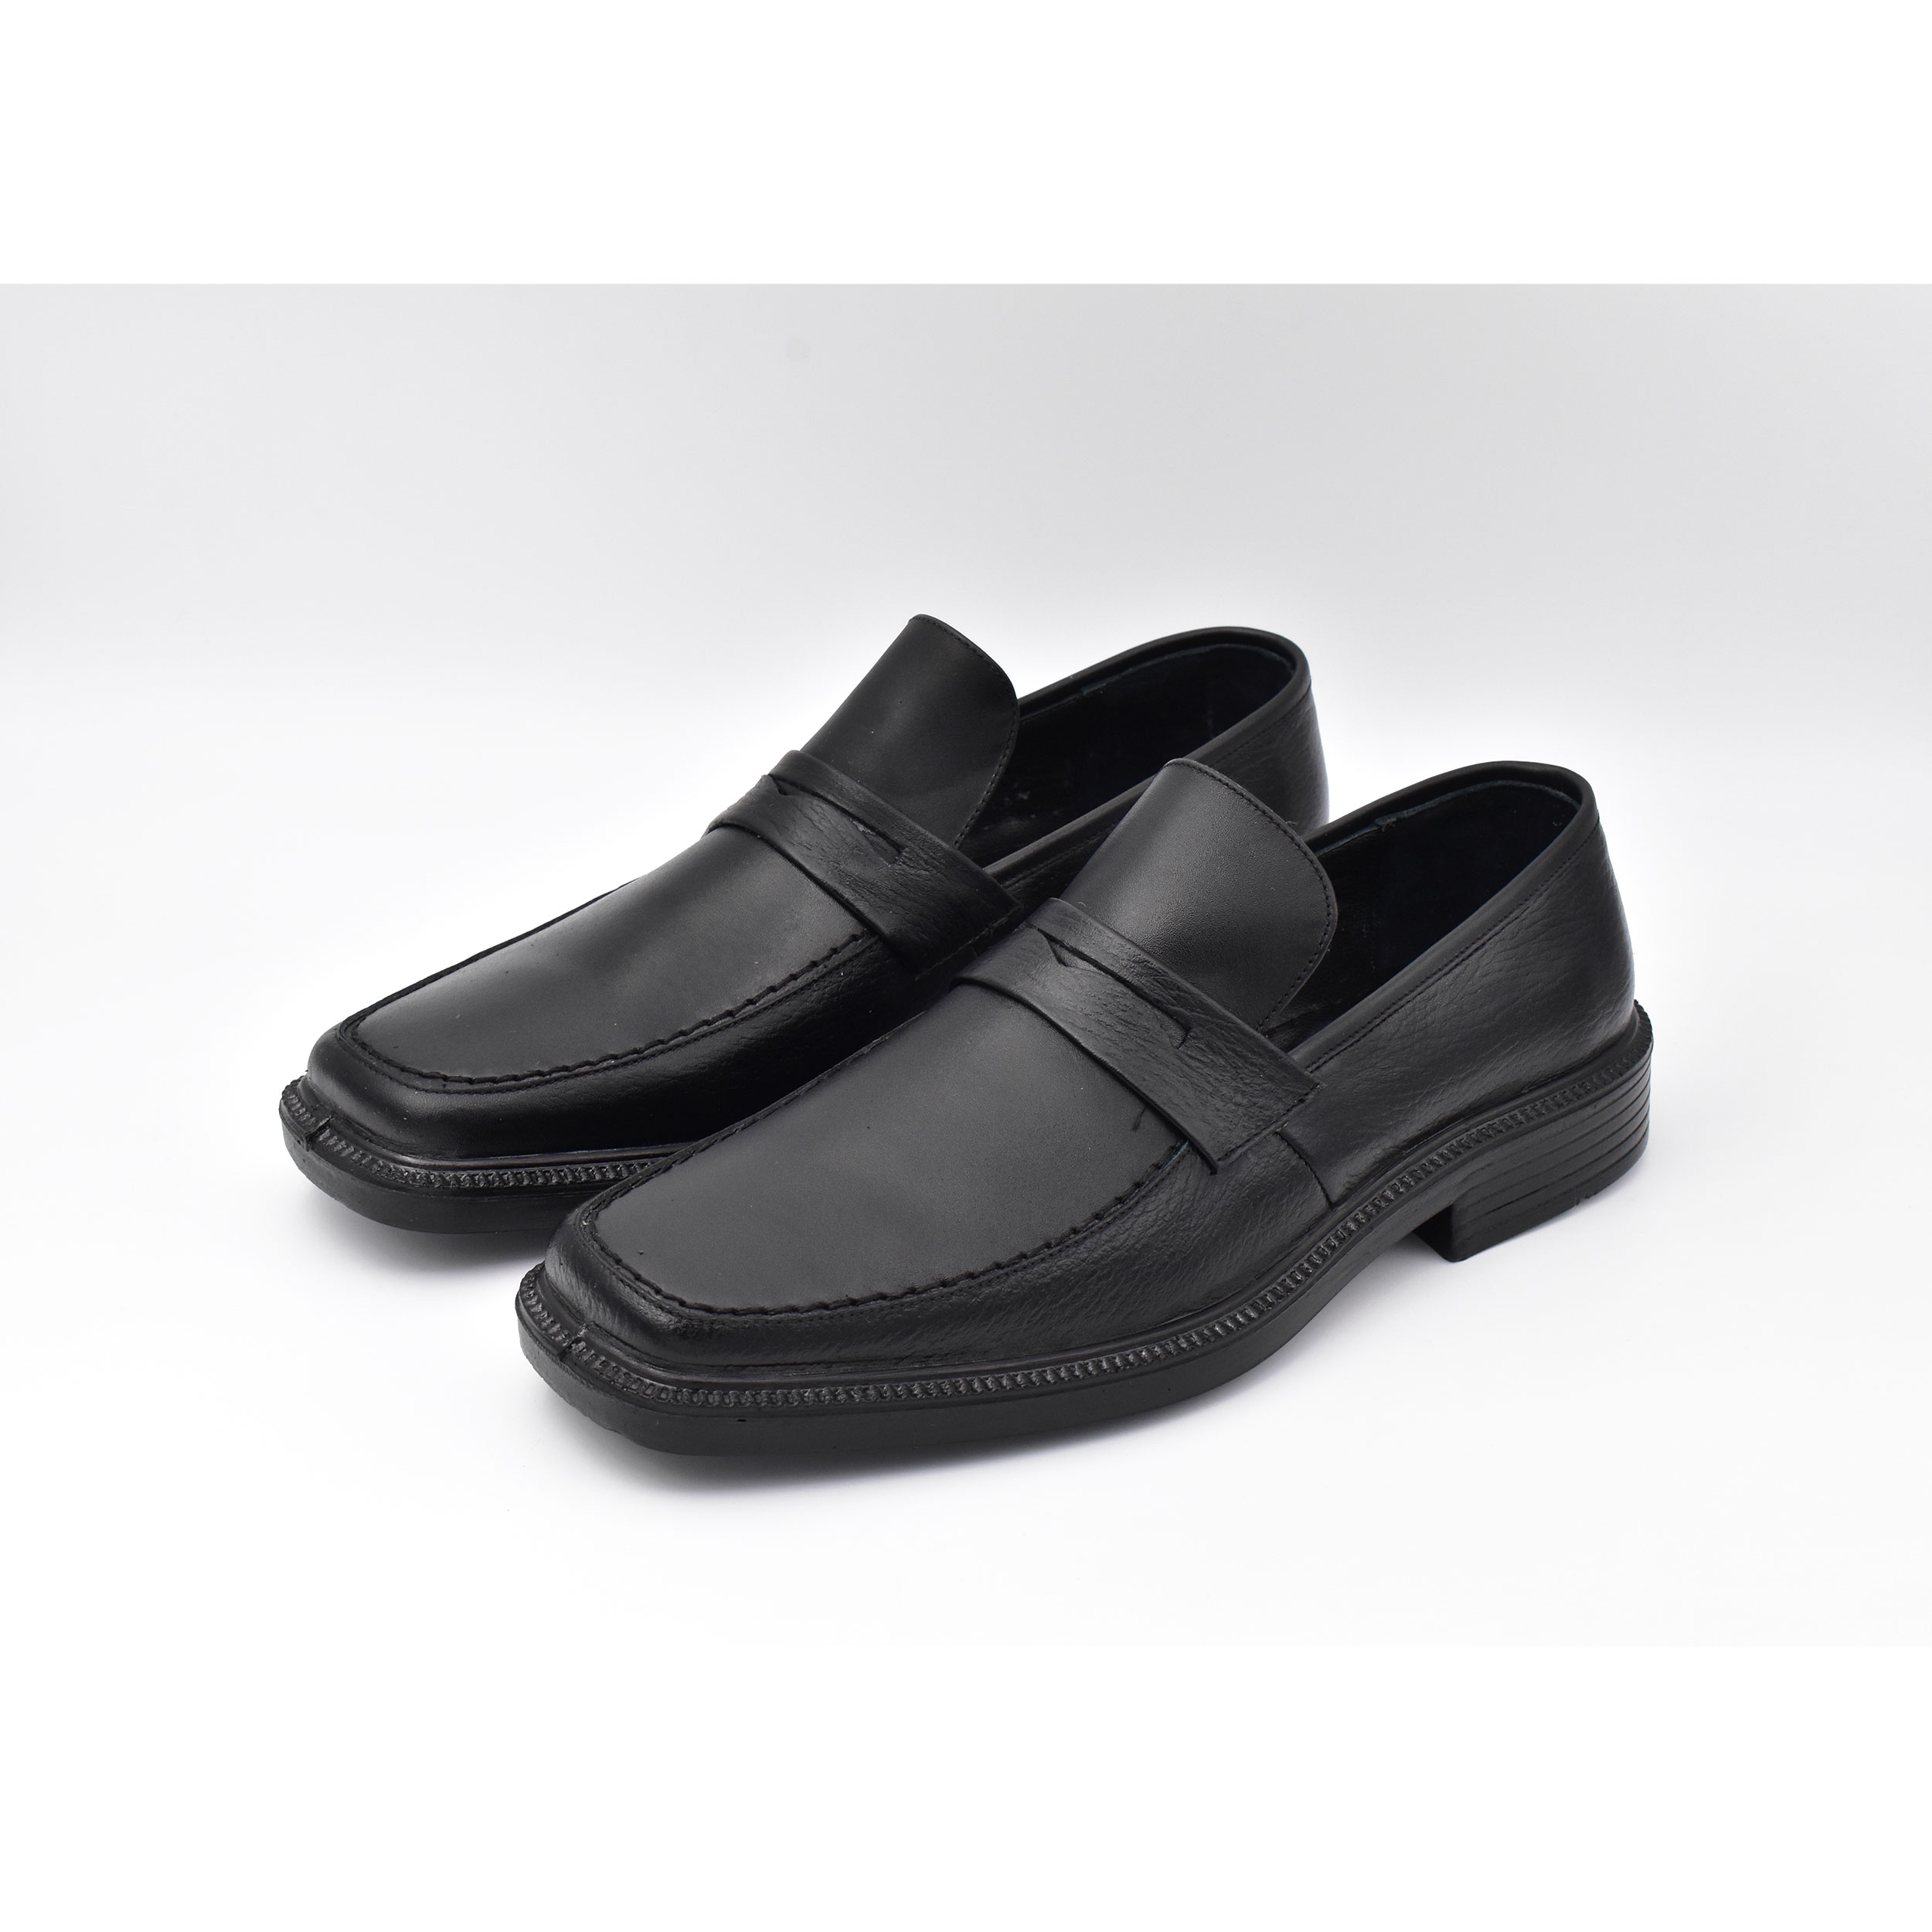 کفش مردانه پاما مدل Oscar کد G1189 -  - 4